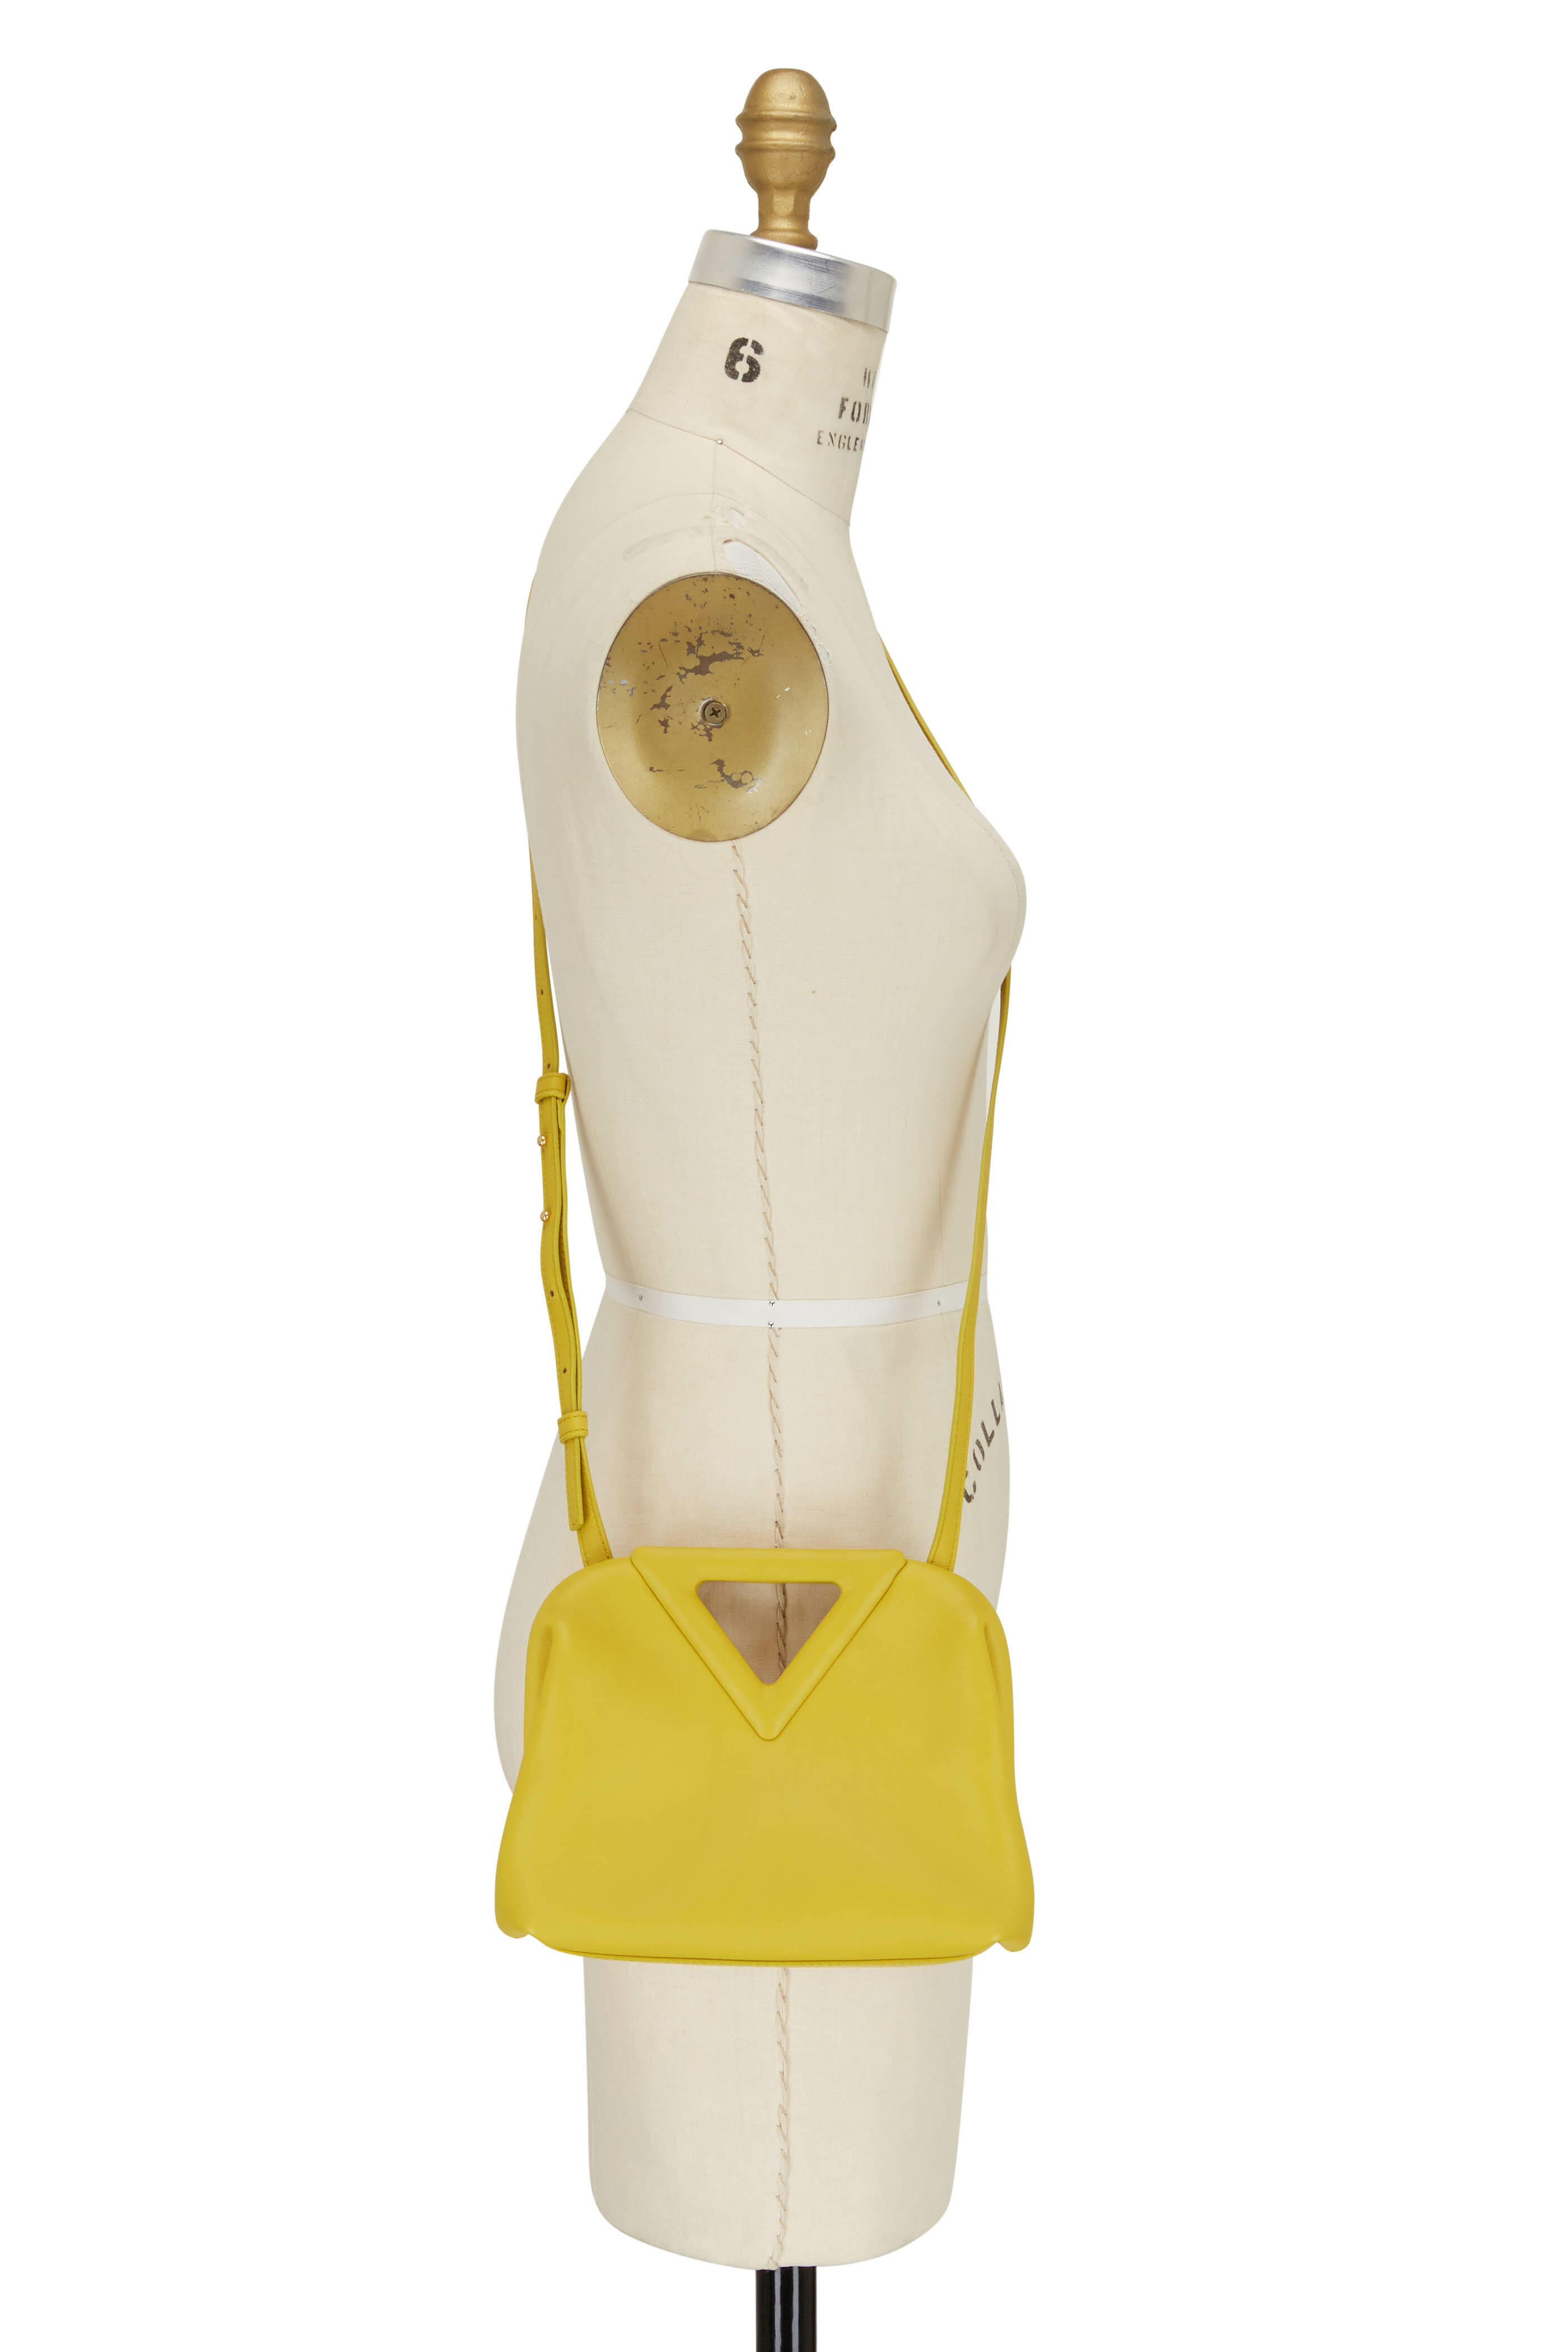 Prada Mini Triangle Crossbody Bag - Yellow for Women